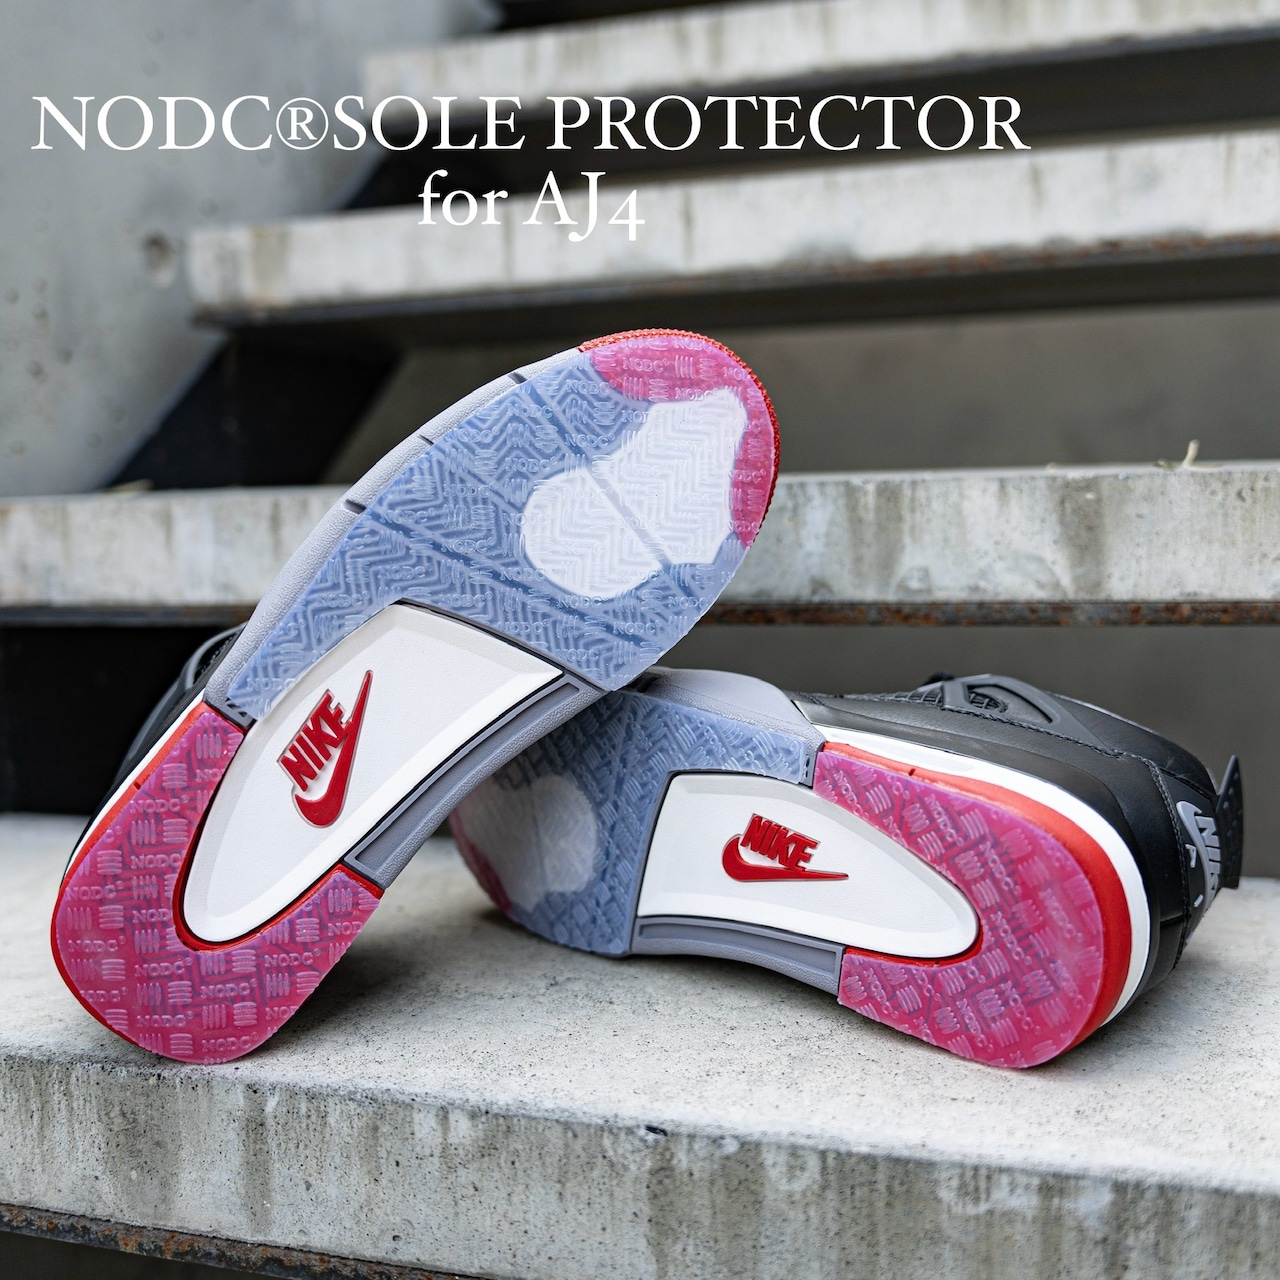 NODC® SOLE PROTECTOR for AJ4 renewal